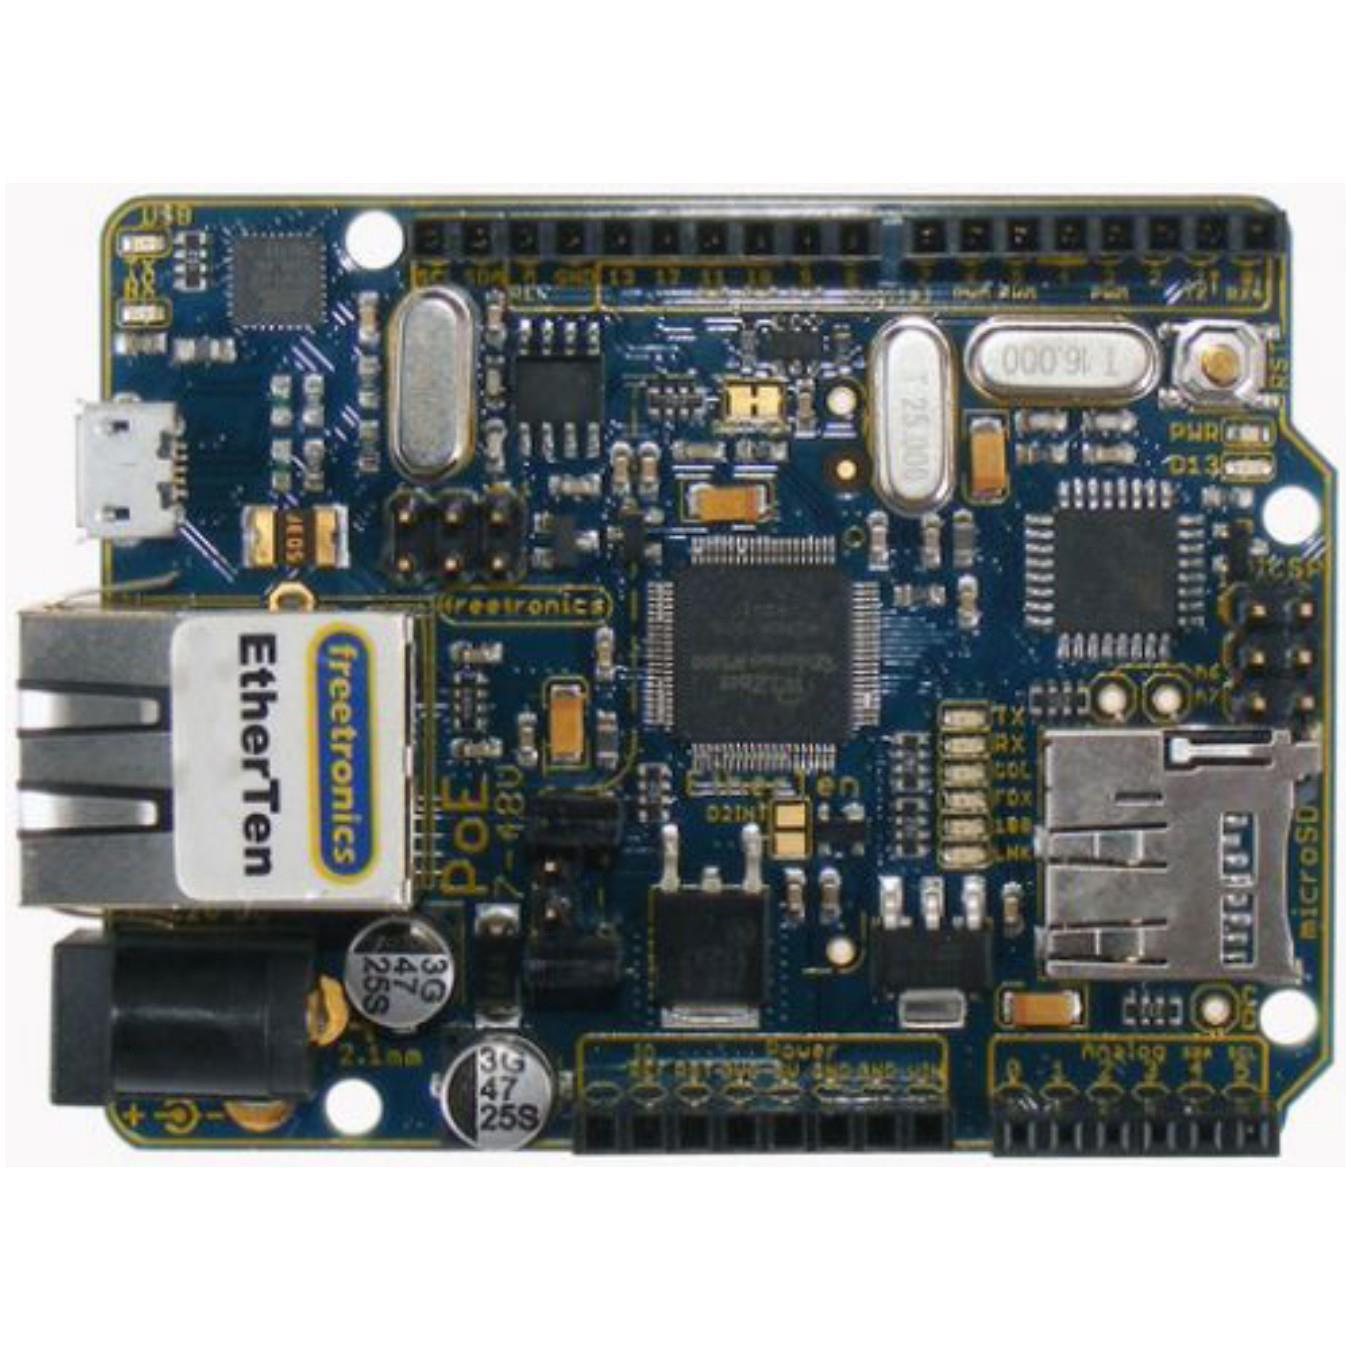 EtherTen Ethernet Arduino-compatibele microcontroller